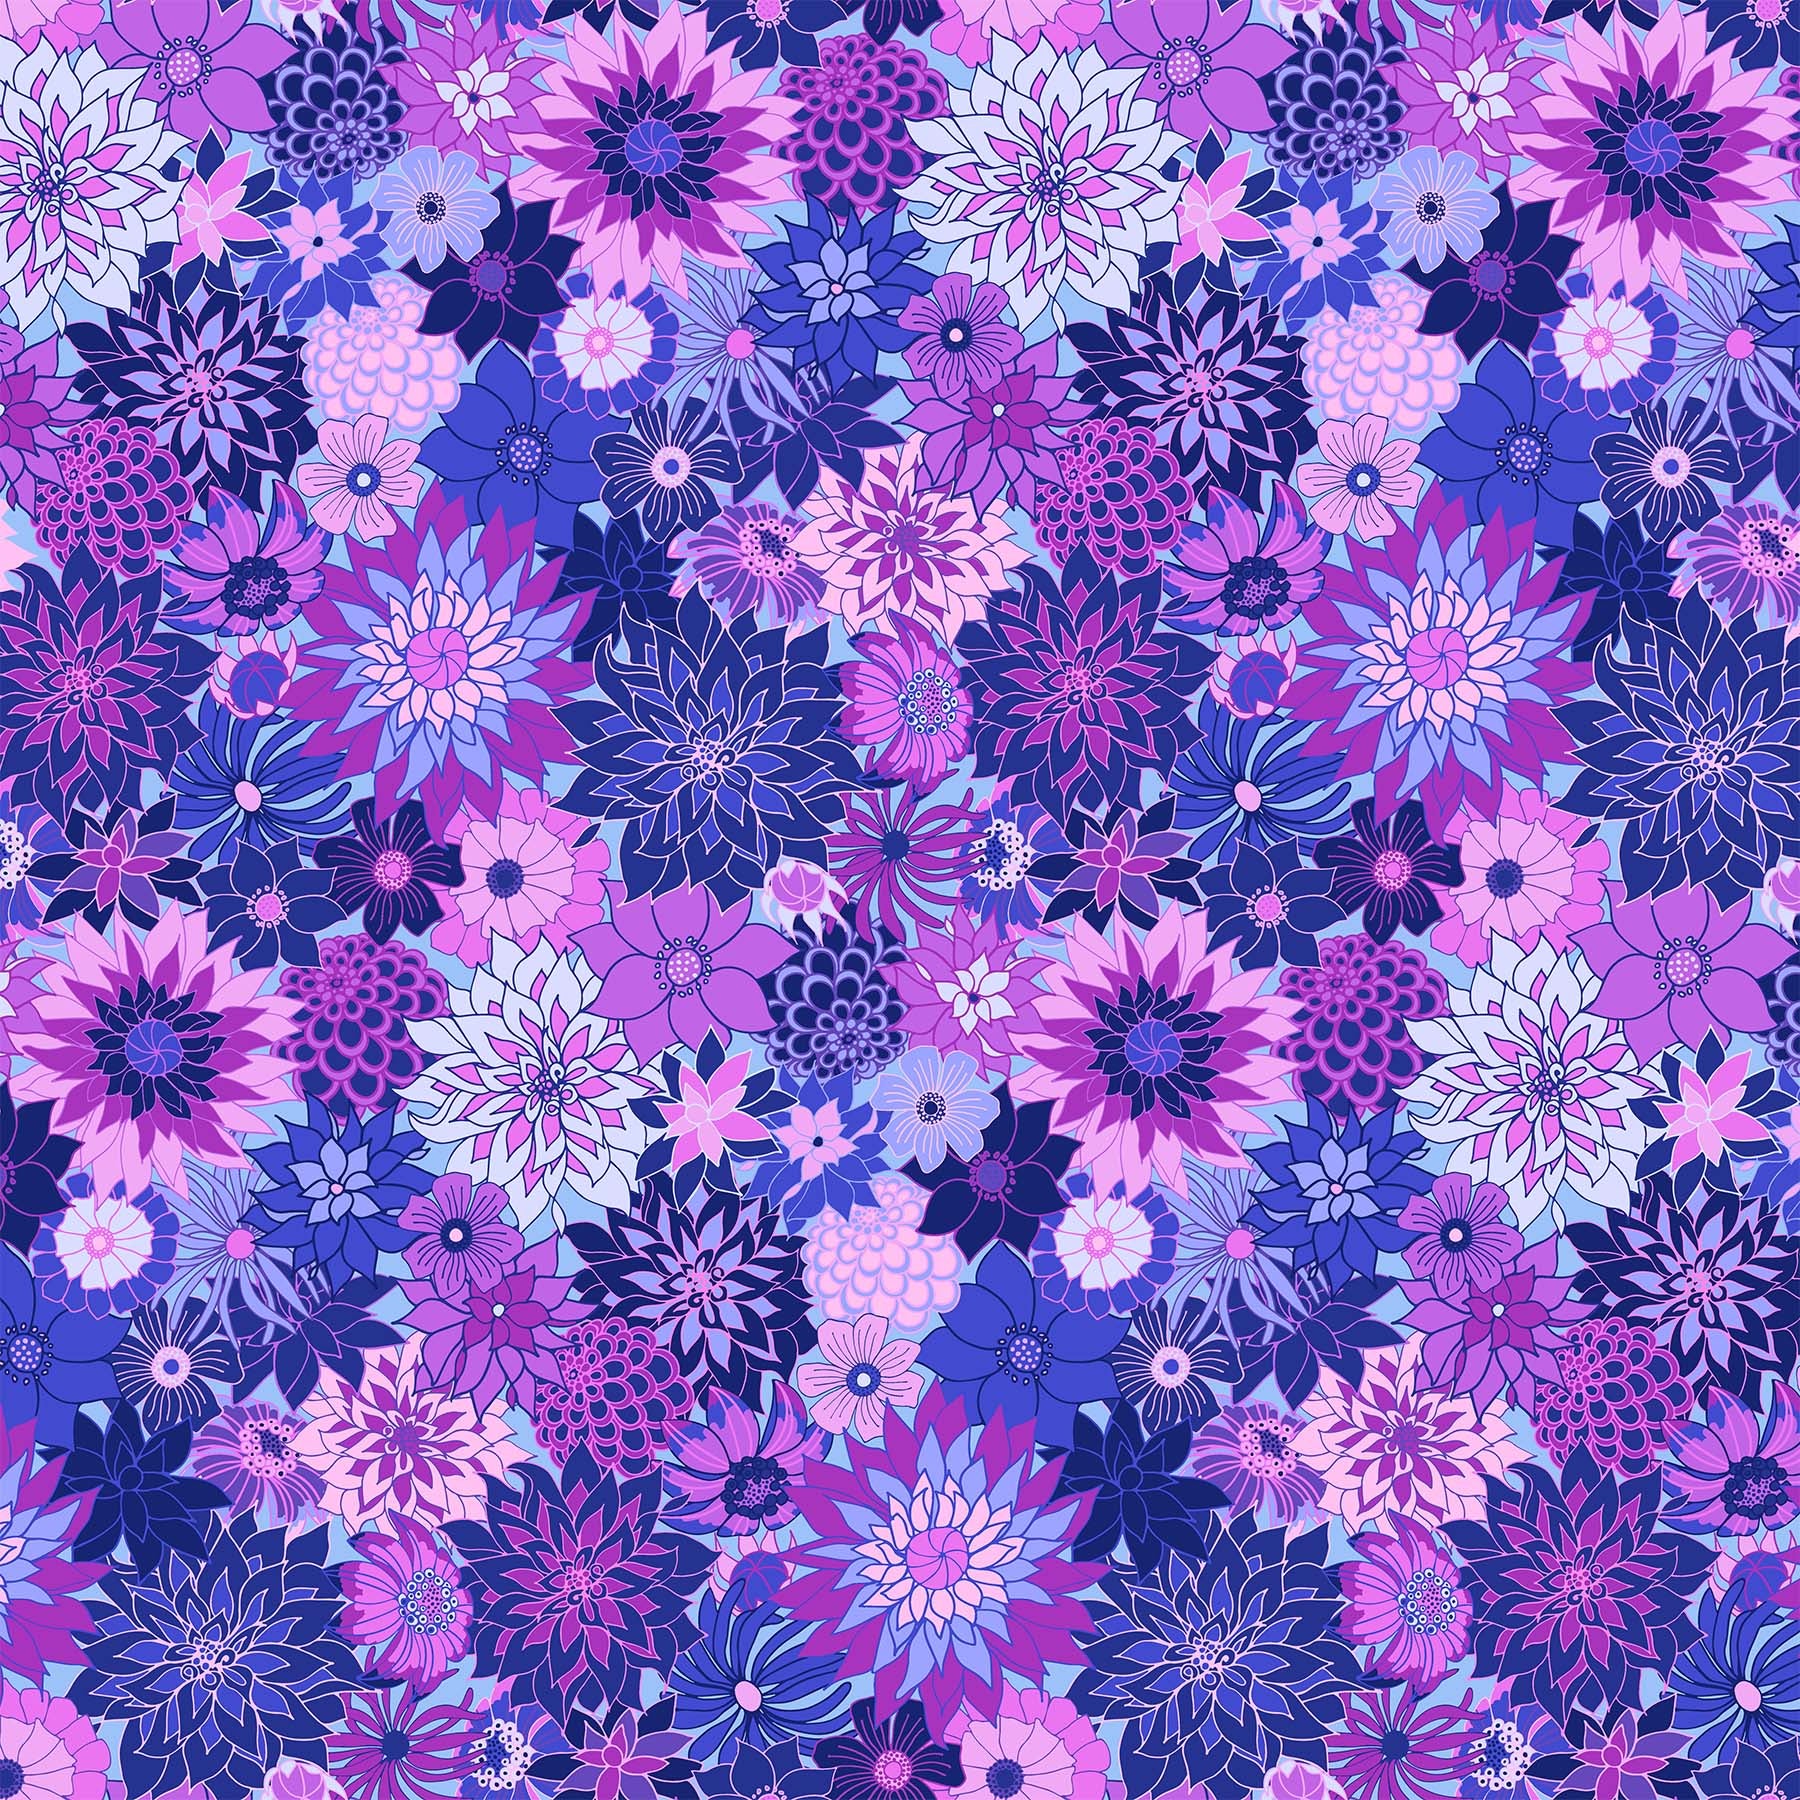 Happiness Quilt Fabric - Dahlias in Purple/Multi - 90592-82